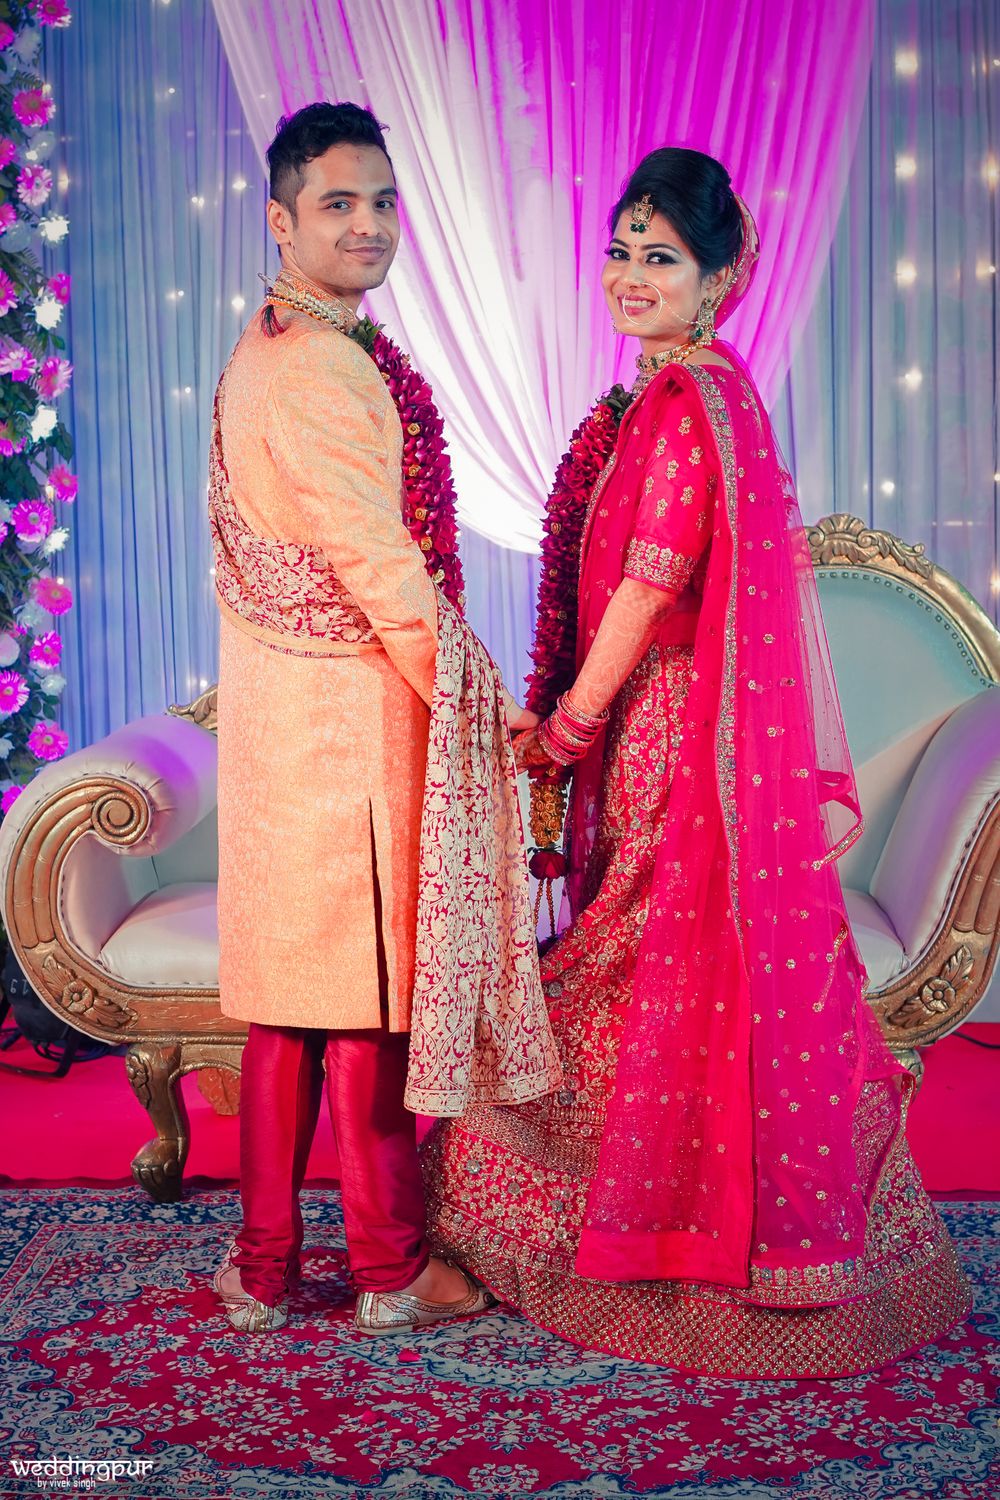 Photo From Shalini & Soumith - By Weddingpur